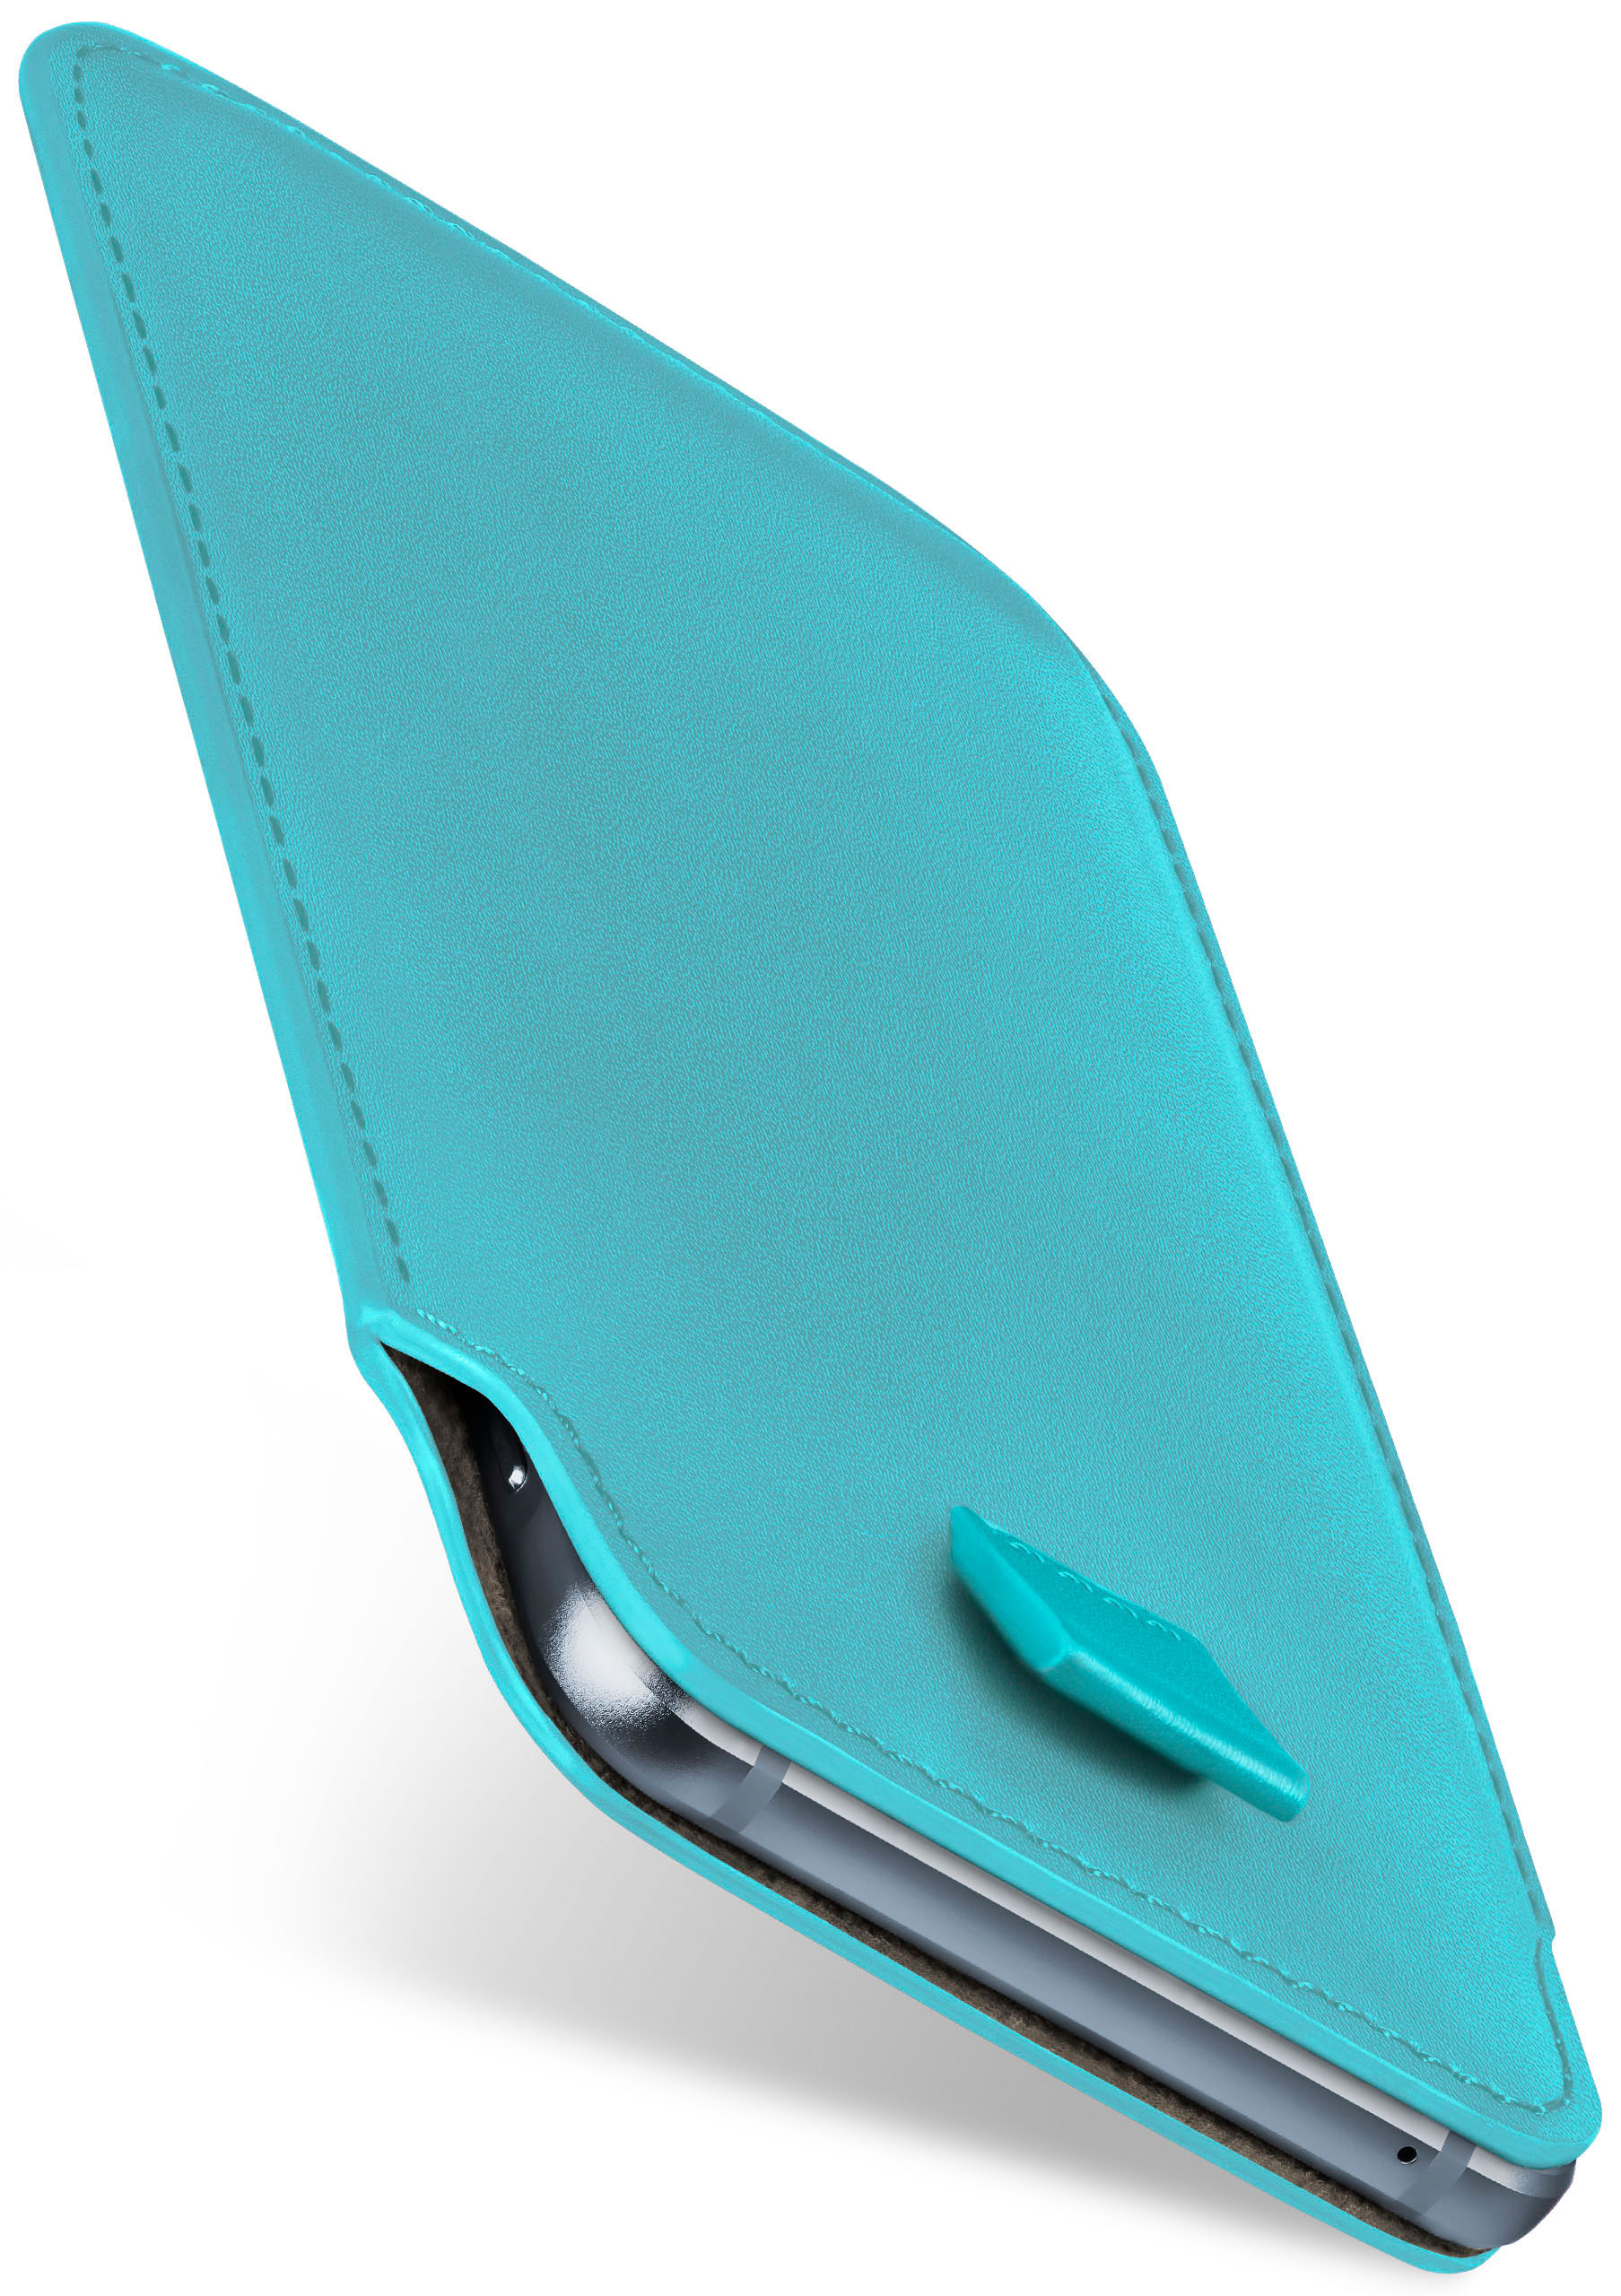 MOEX Case, 3.1, Aqua-Cyan Cover, Nokia, Slide Full